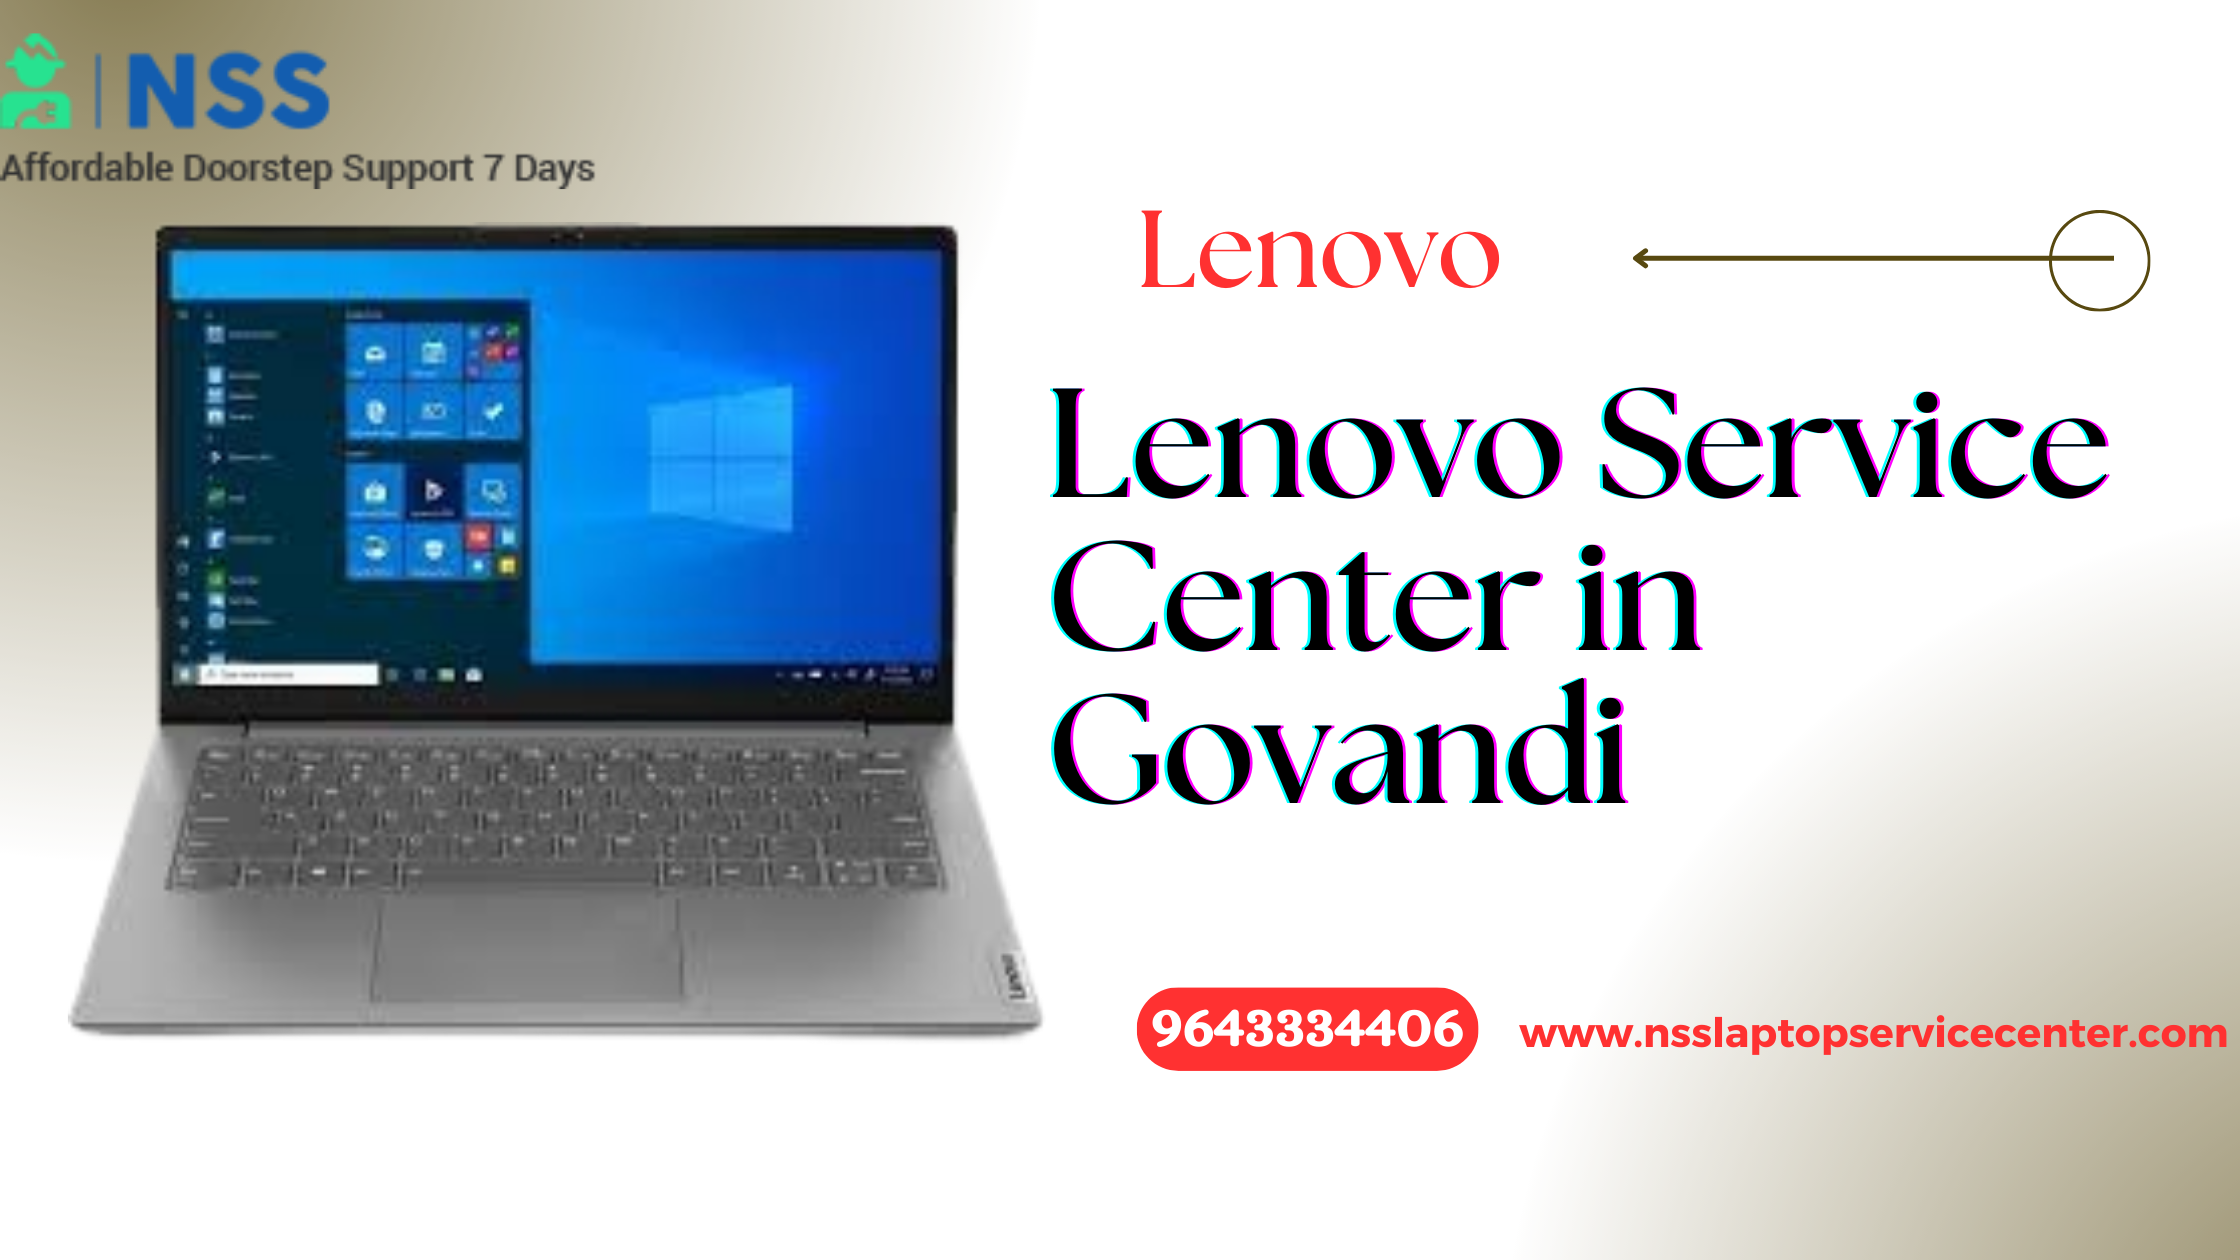 Lenovo Service Center in Govandi Near Mumbai